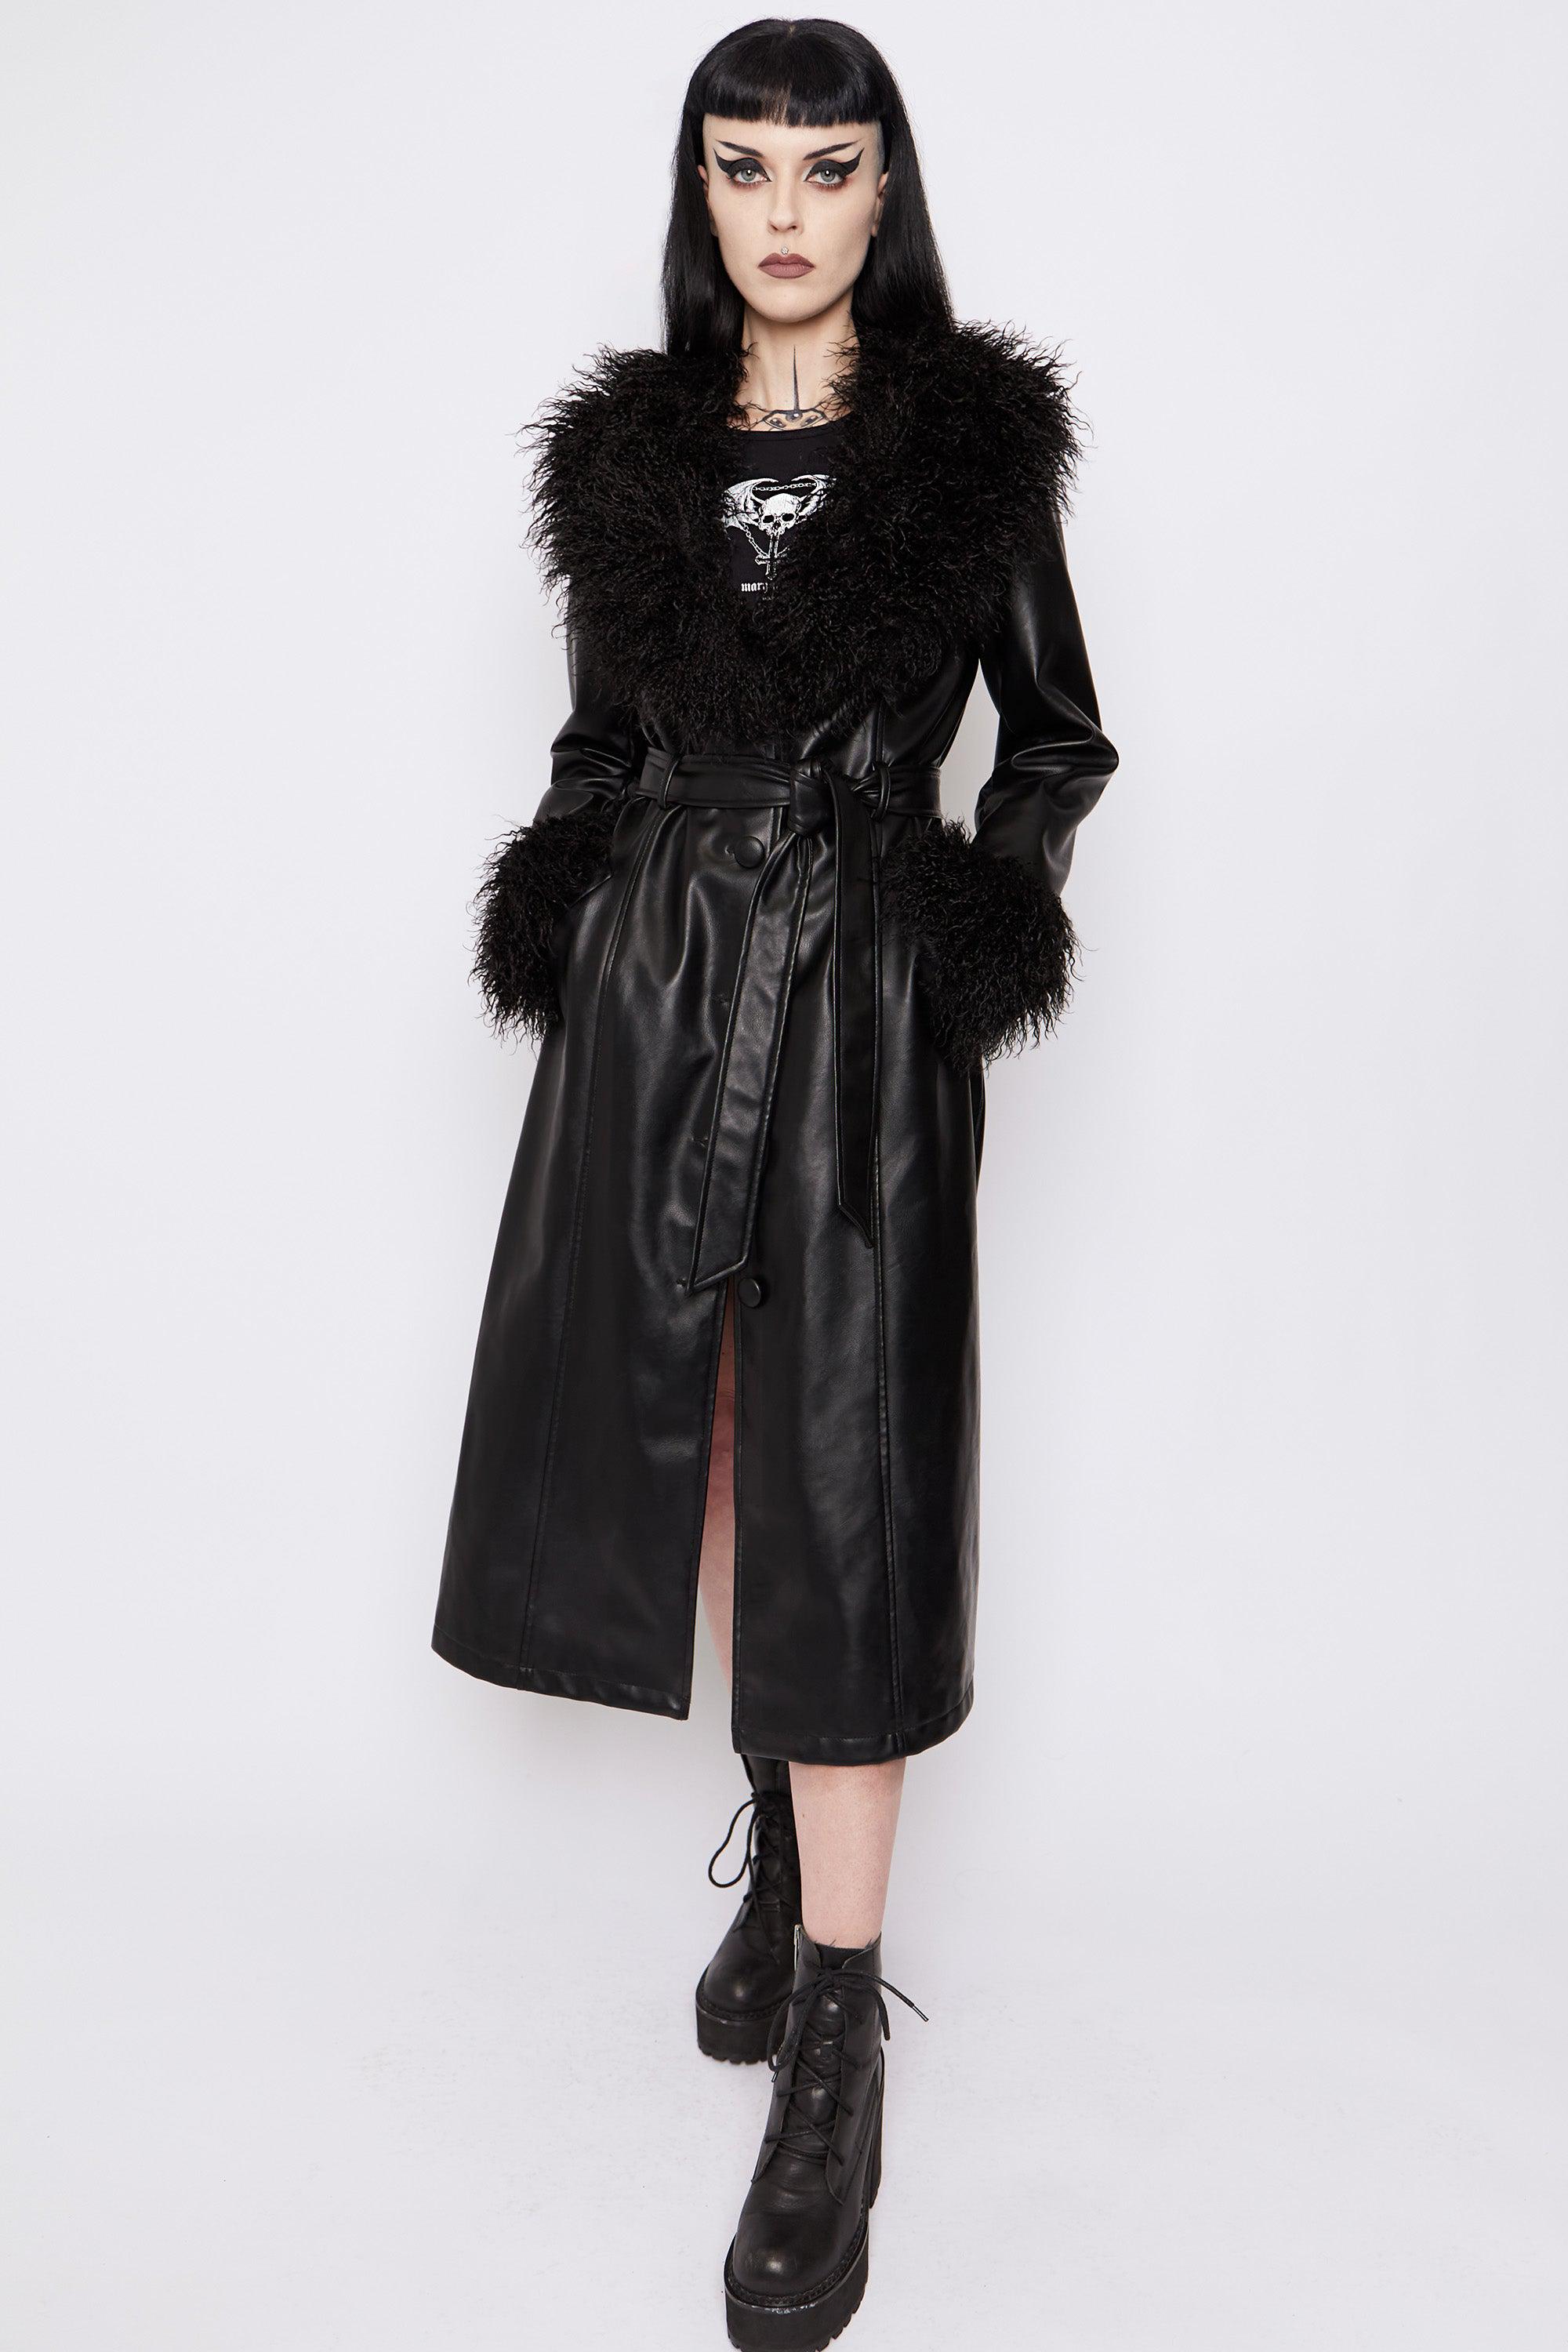 Lori Vegan Leather & Faux Fur Jacket